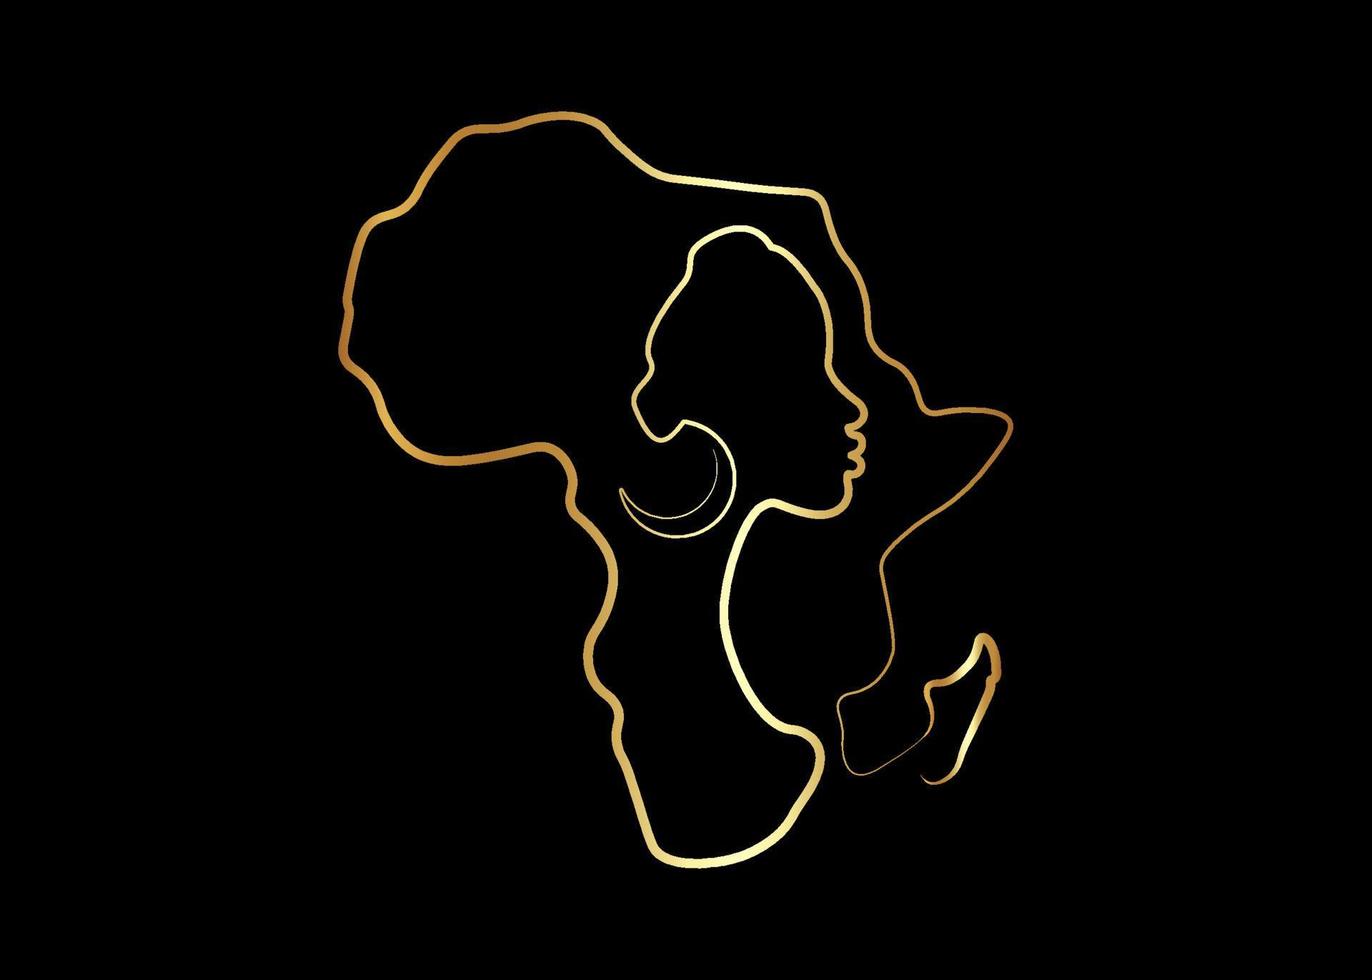 svart afrikansk kvinna i guldlinjekonststil, kontinuerlig ritning av afrokvinna och afrikansk kontinentkarta. vektor gyllene linework ikon logotyp isolerad på svart bakgrund